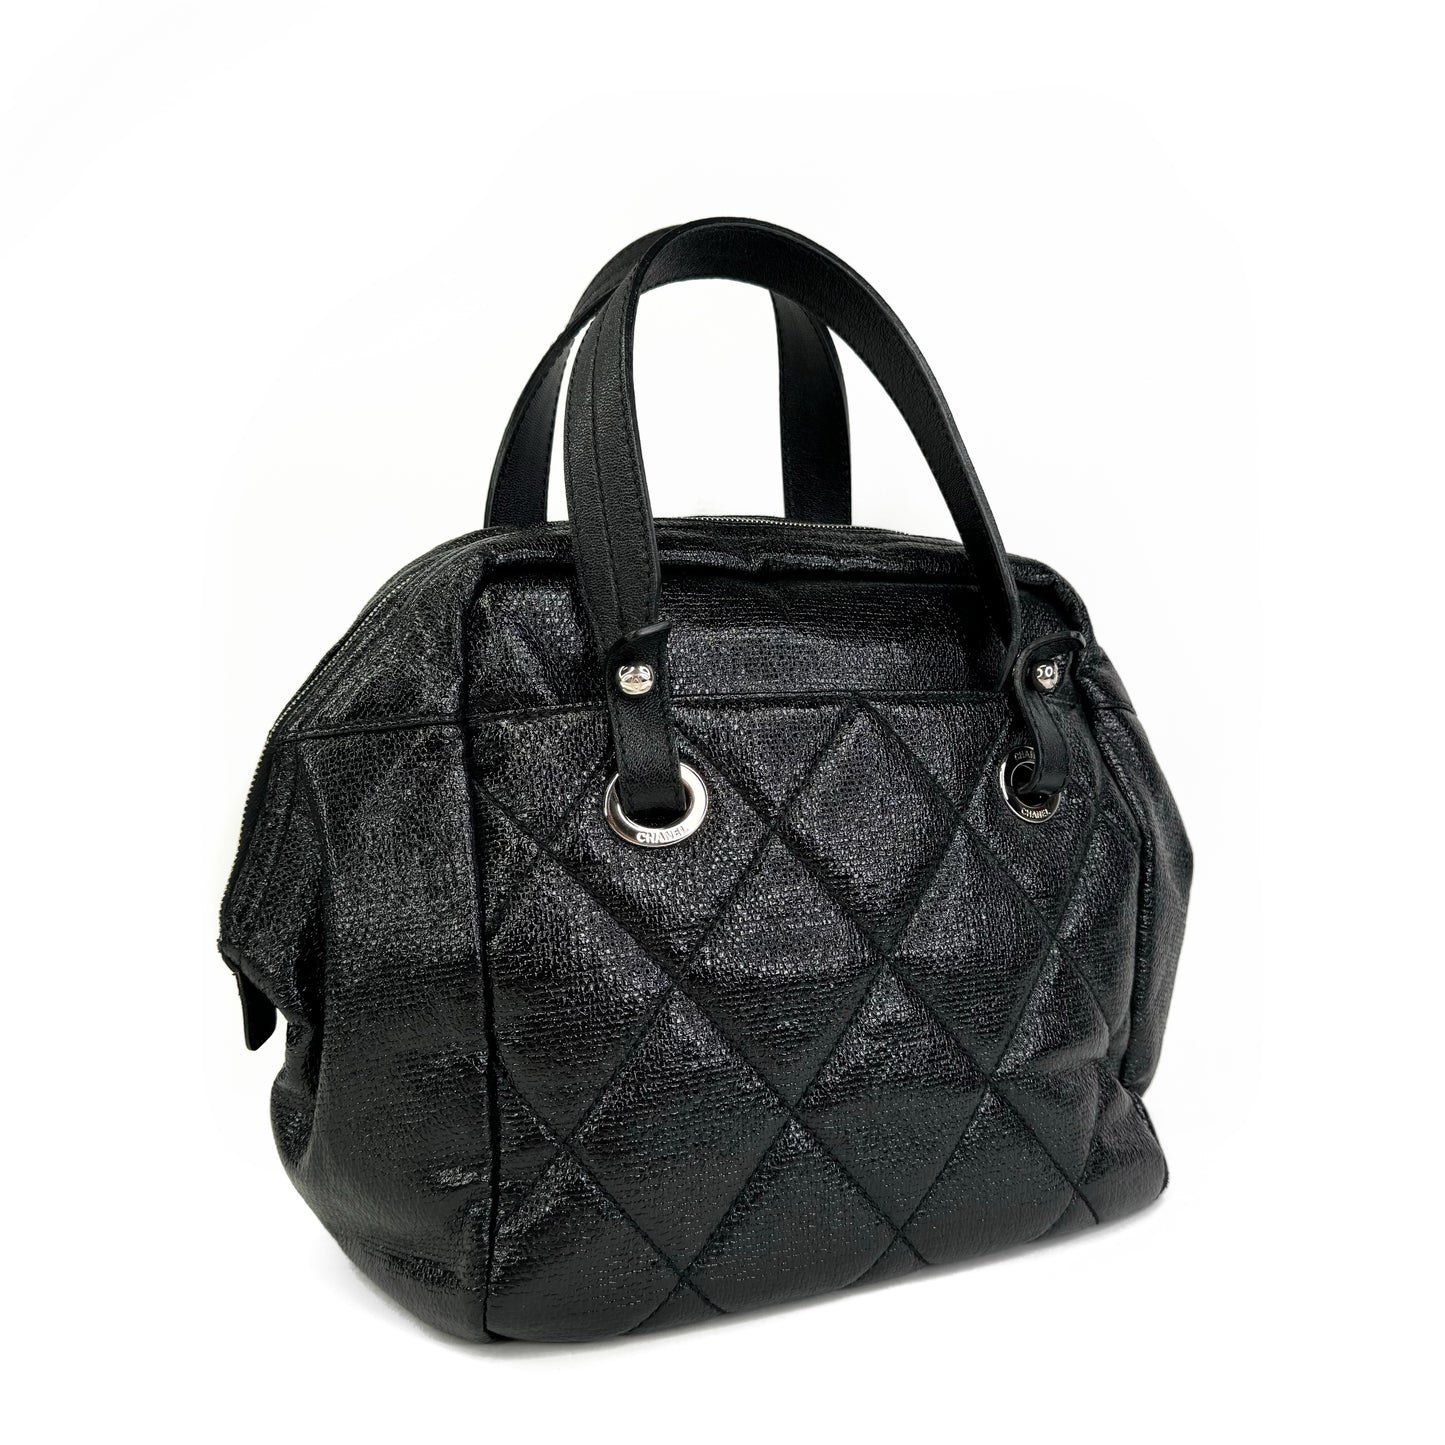 Chanel Paris Biarritz Bowler Bag